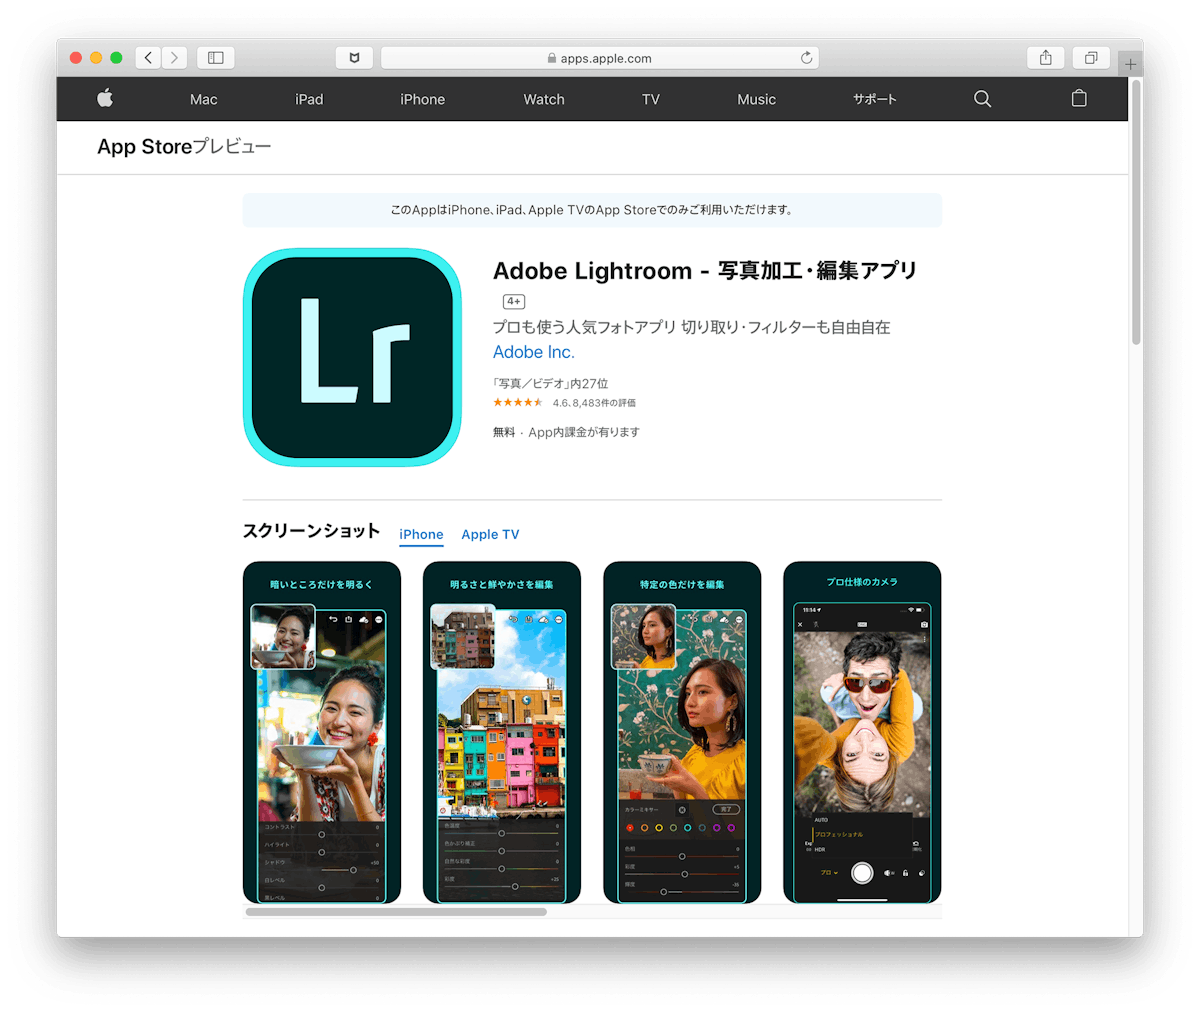 Adobe Lightroom - 写真加工・編集アプリ